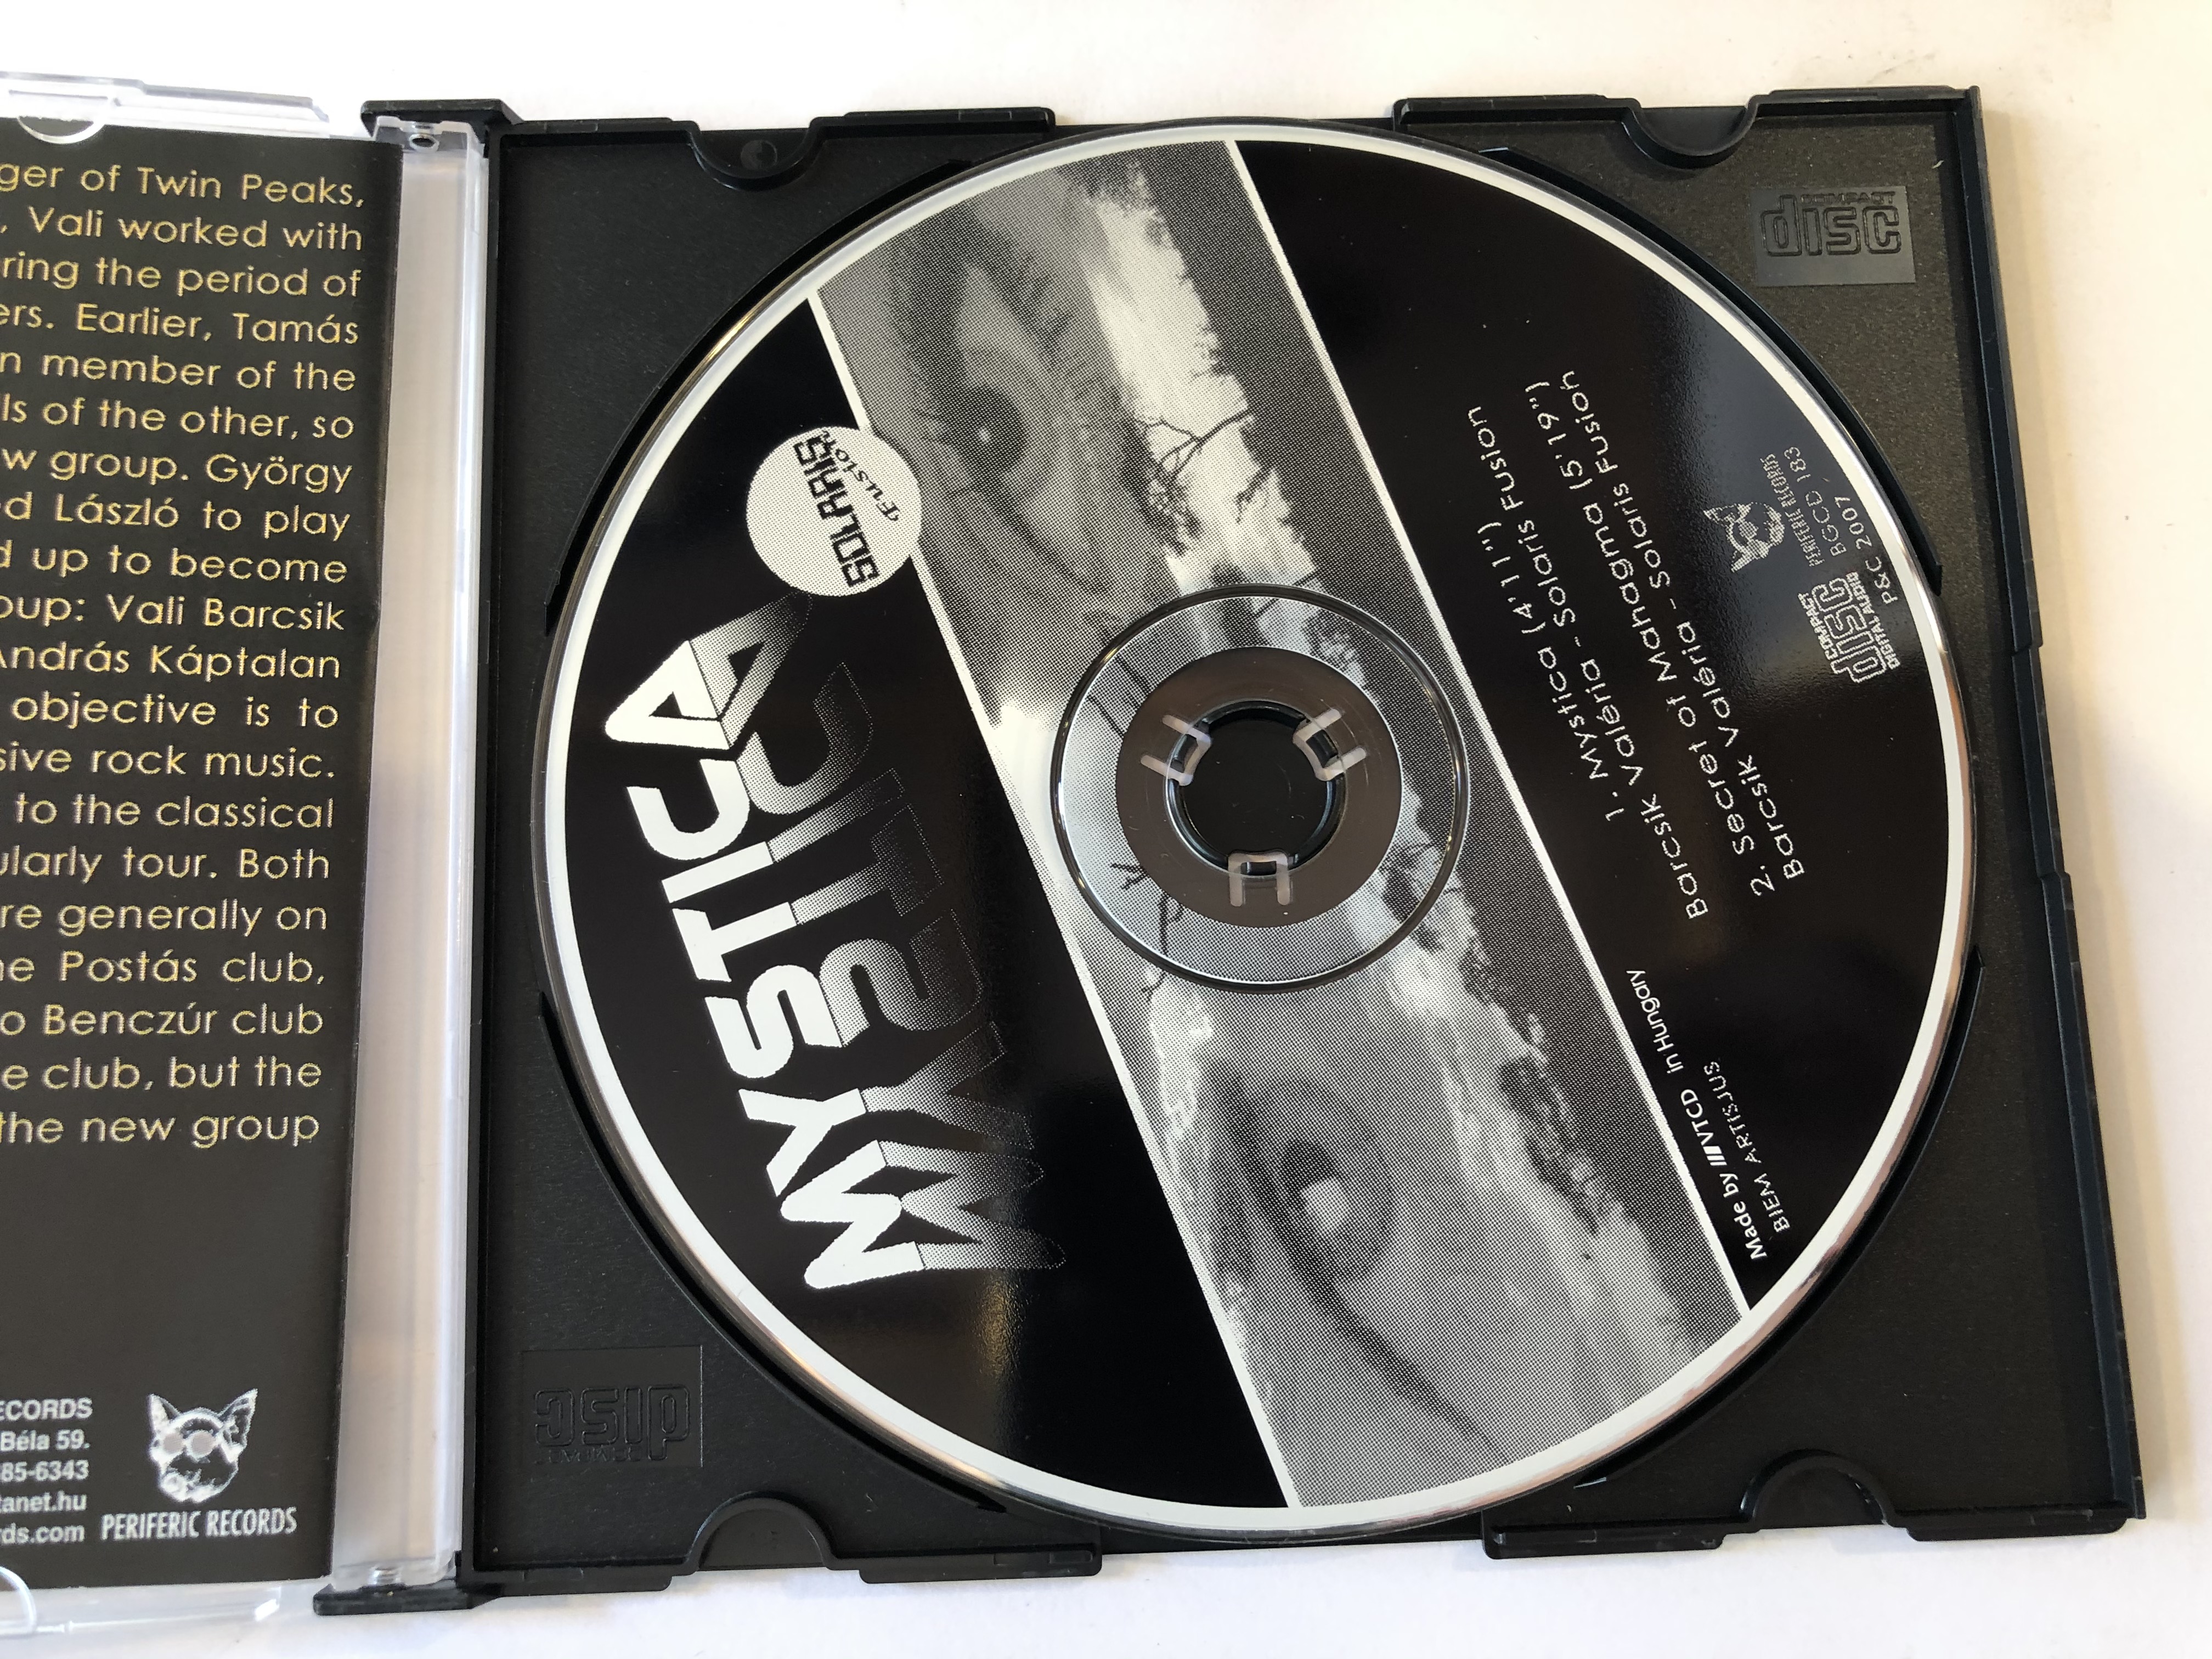 solaris-fusion-mystica-periferic-records-audio-cd-2007-bgcd-183-2-.jpg